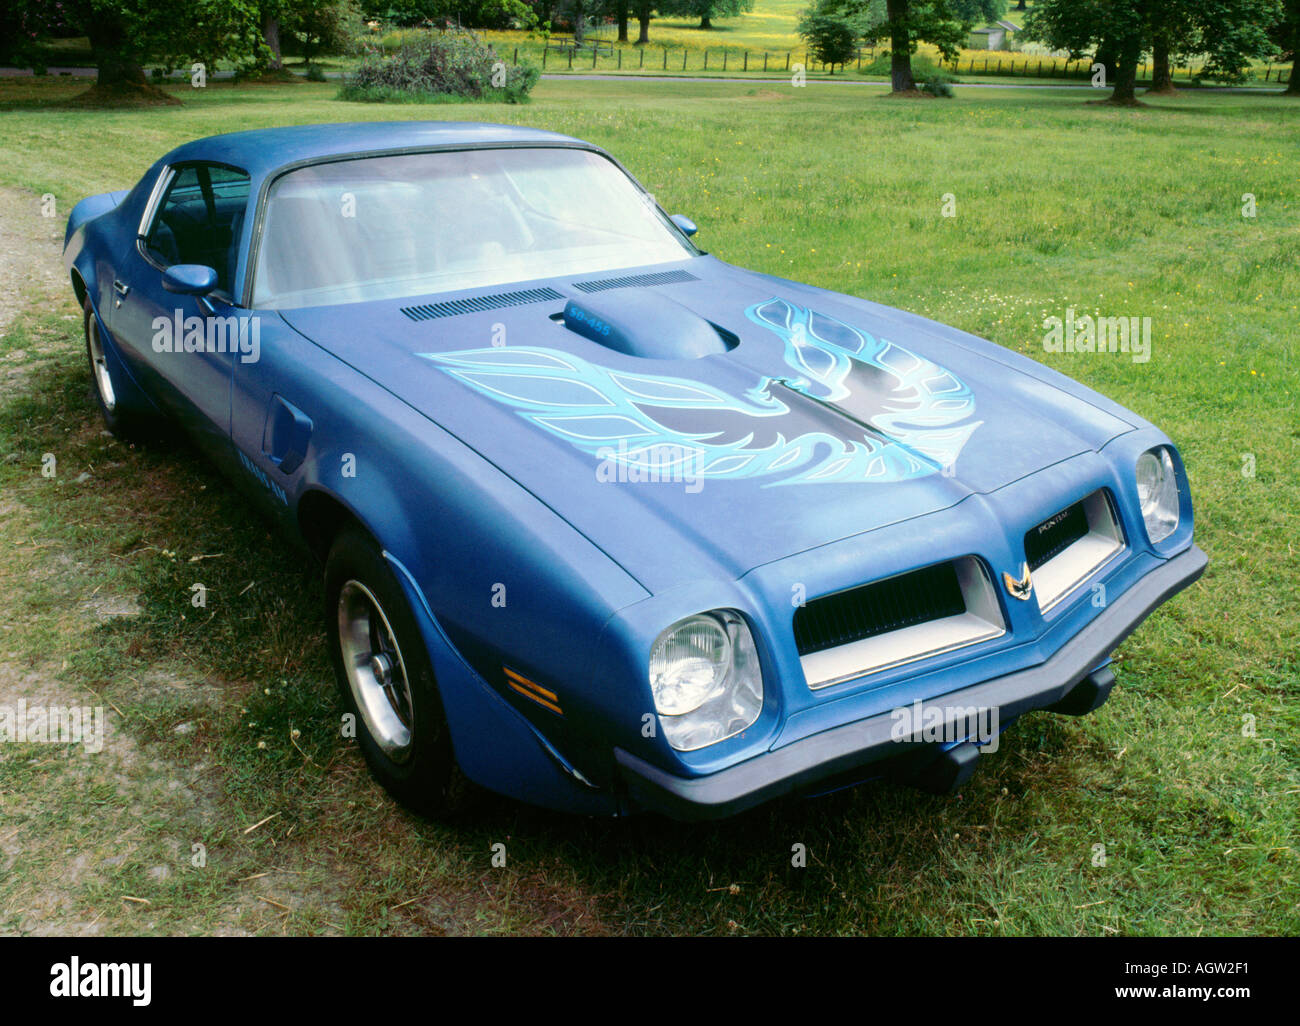 1974 Pontiac Trans AM 455 Super Duty Stock Photo